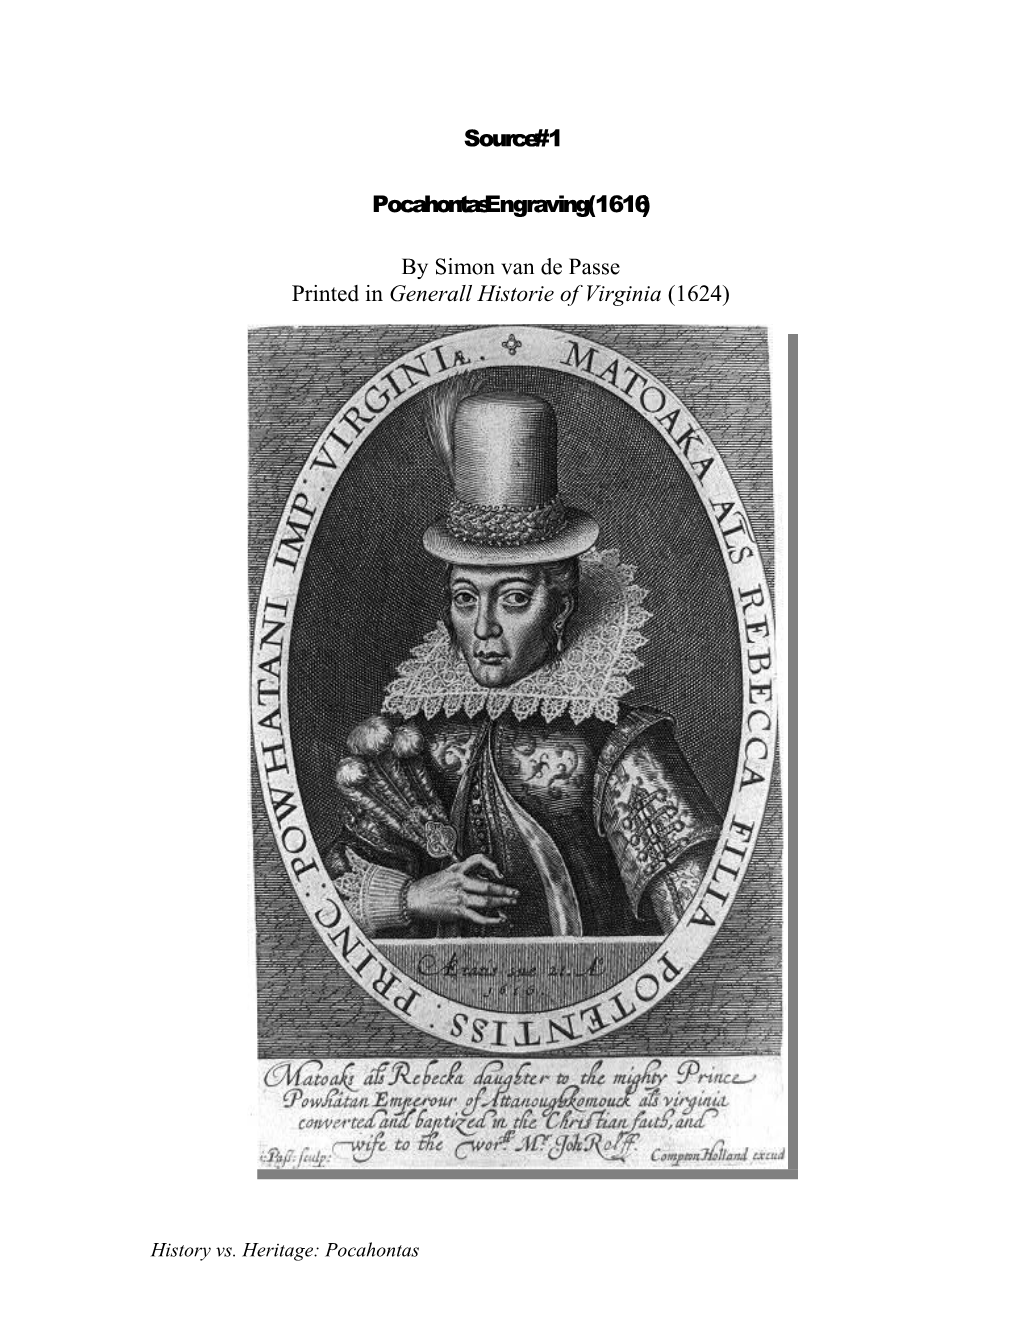 Printed in Generall Historie of Virginia (1624)